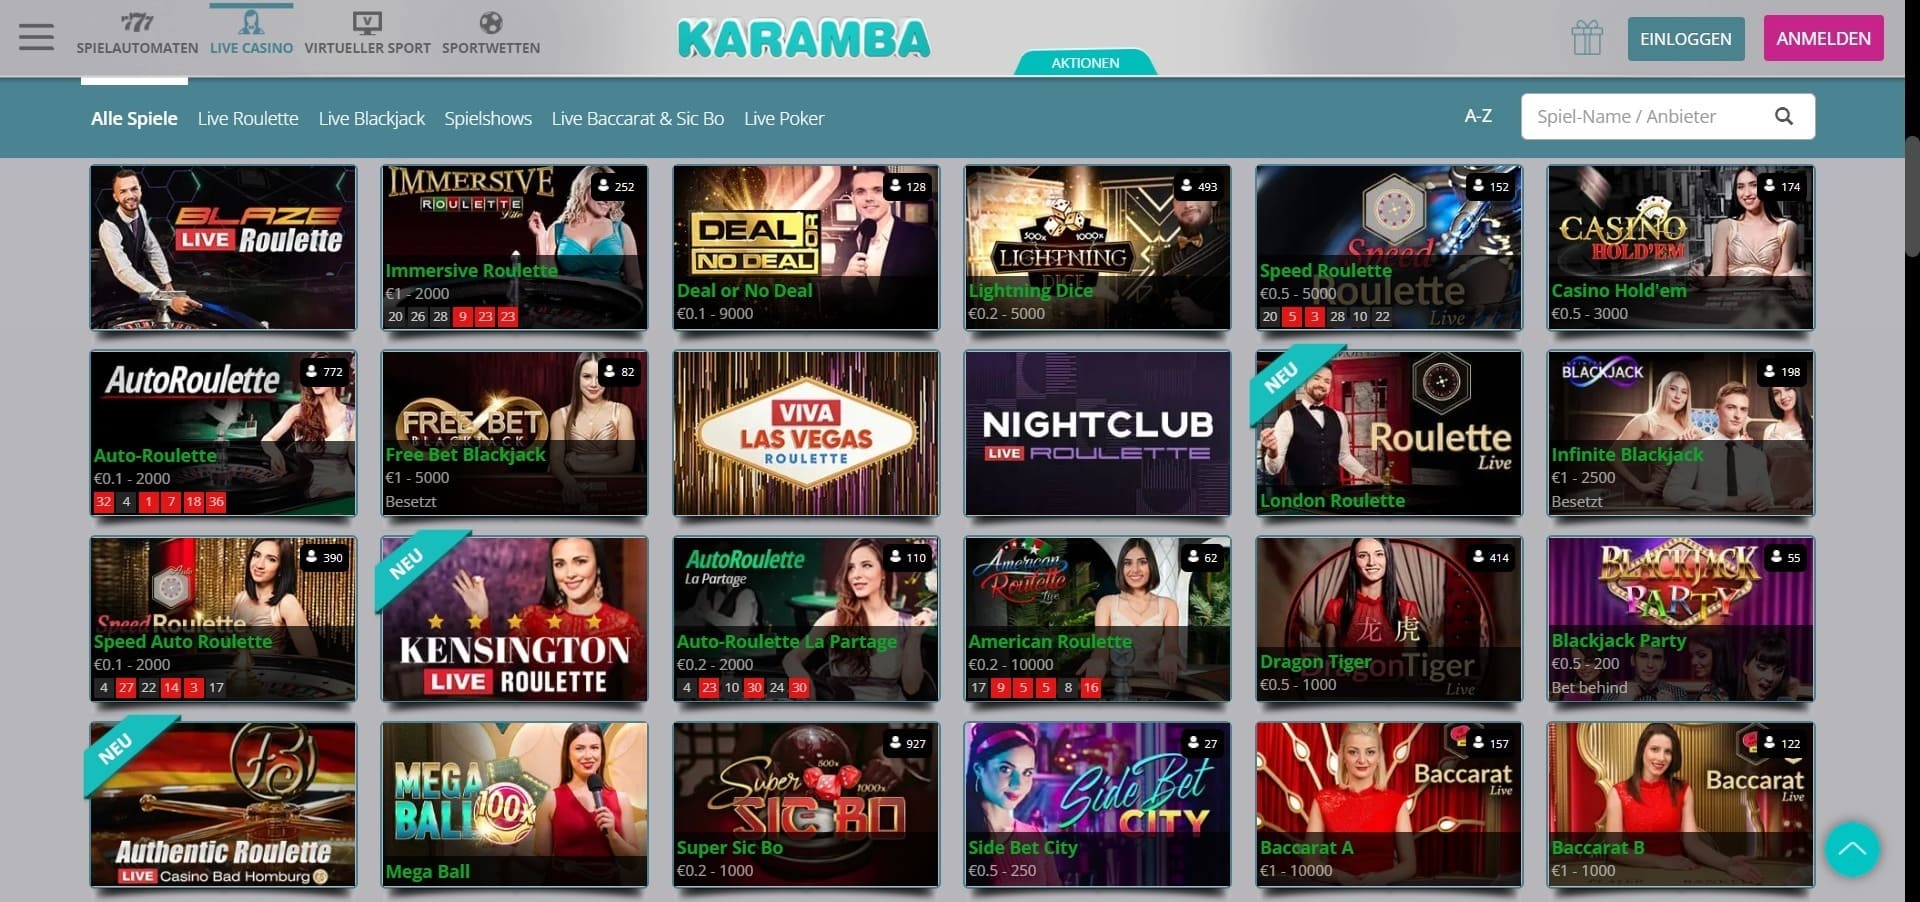 Karamba Casino live